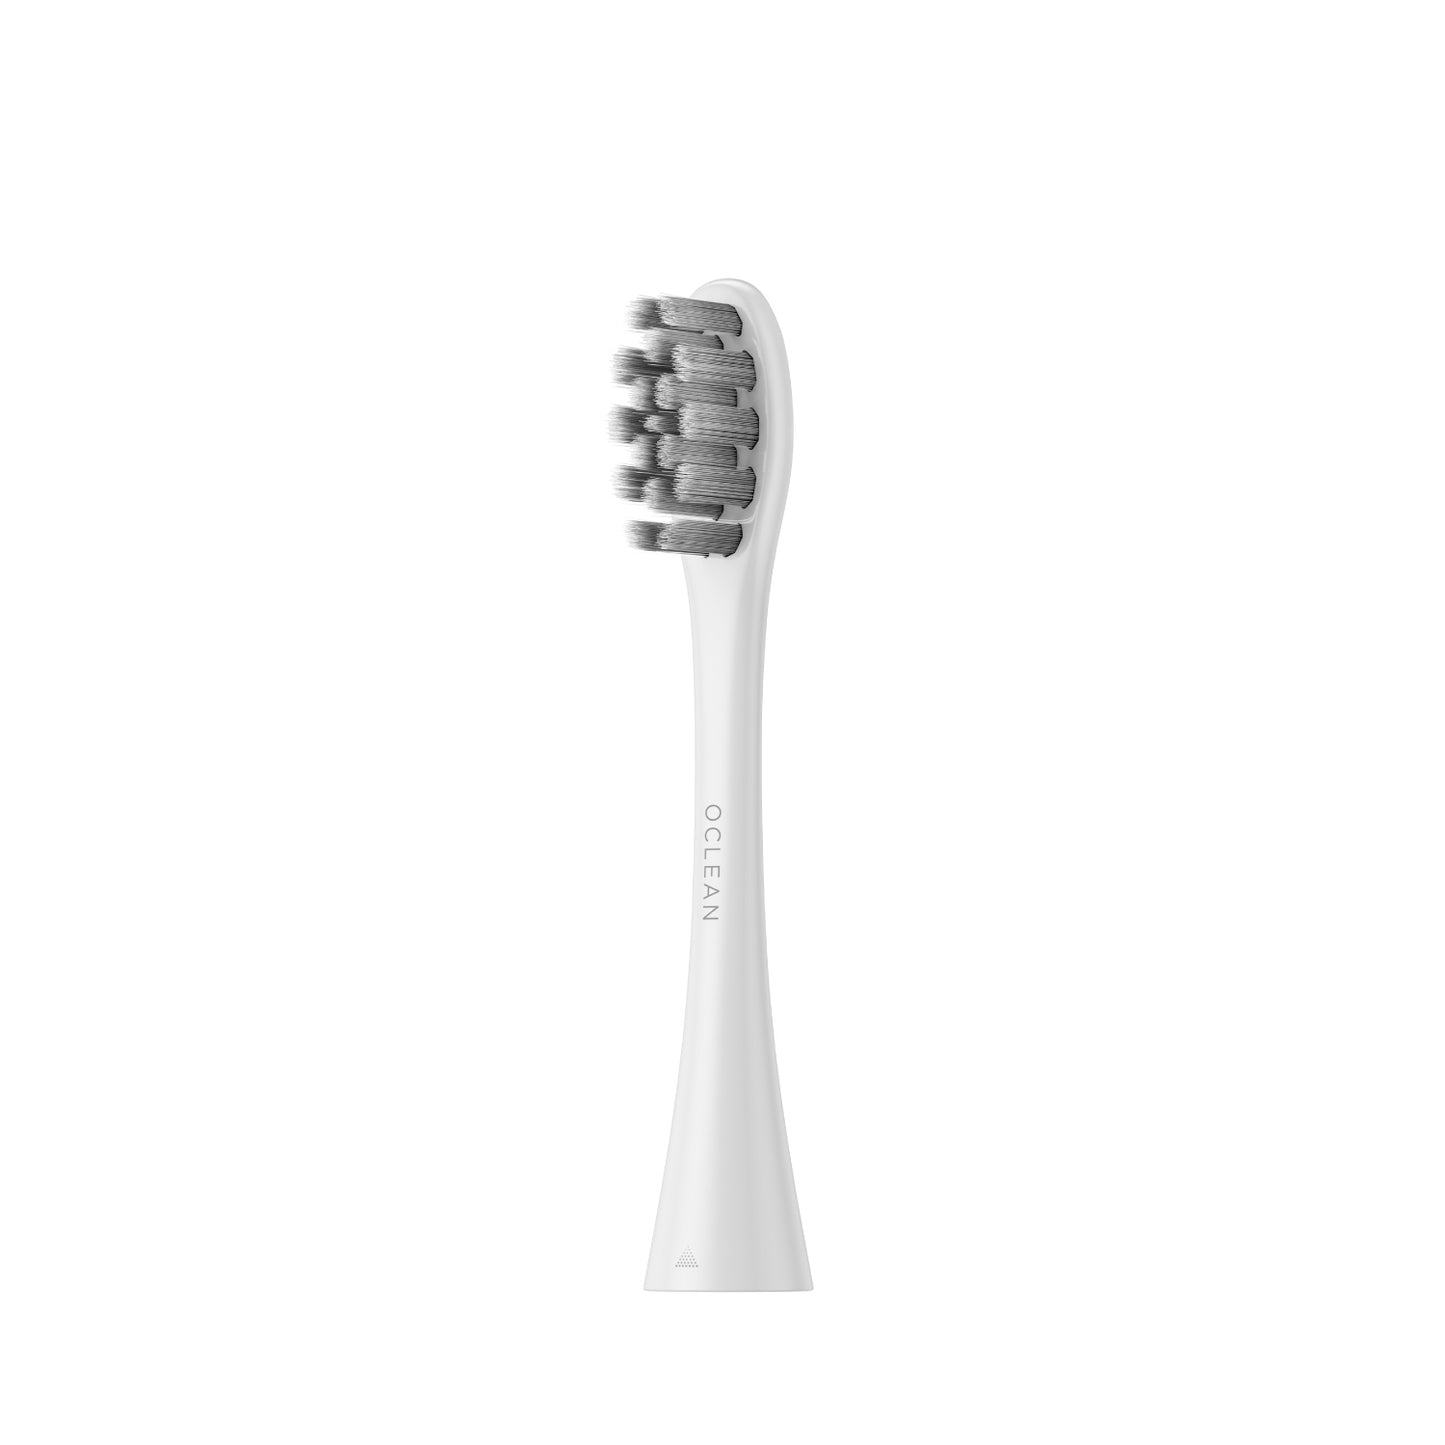 Oclean Brush Heads Refills Toothbrush Replacement Heads Gum Care P1S12 Oclean US Store